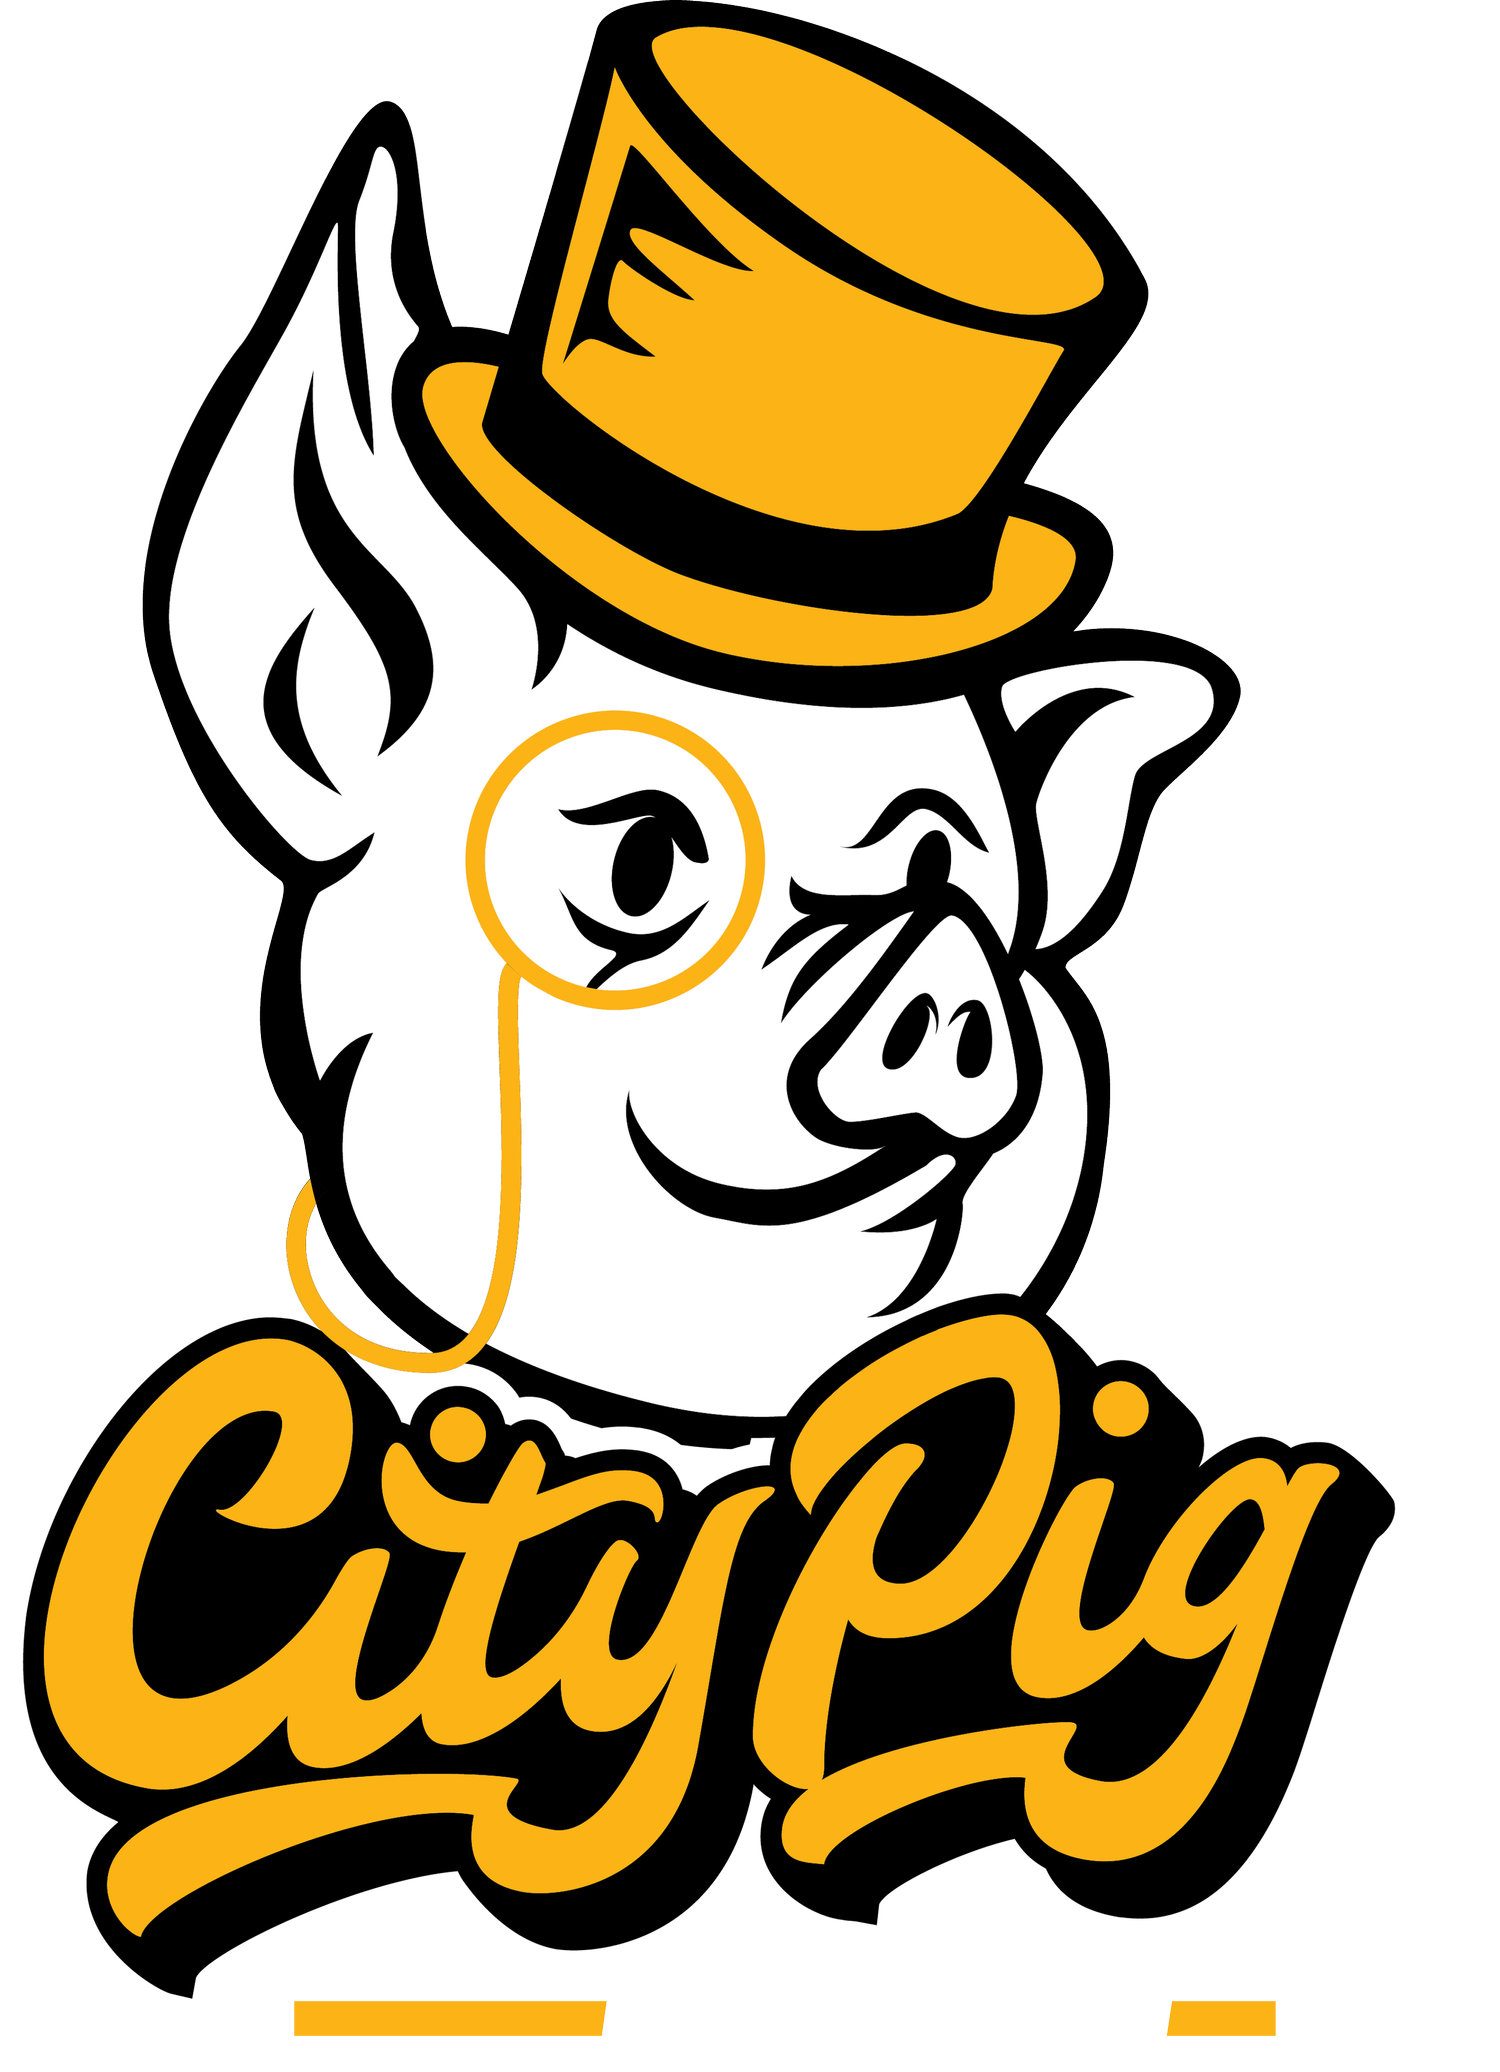 City Pig Capital